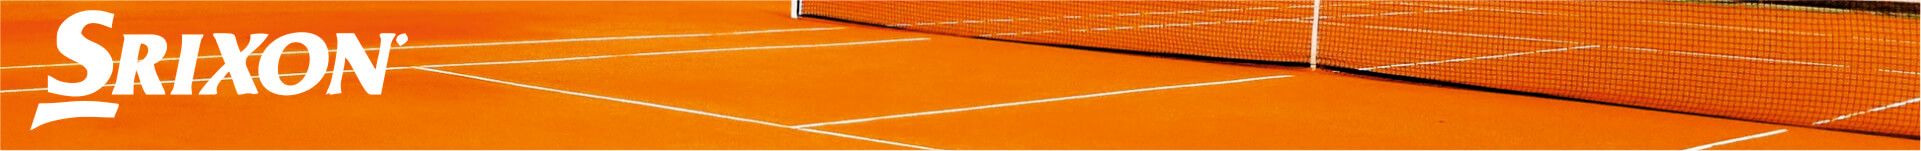 Racchette Srixon-Dunlop - Tennis Corner